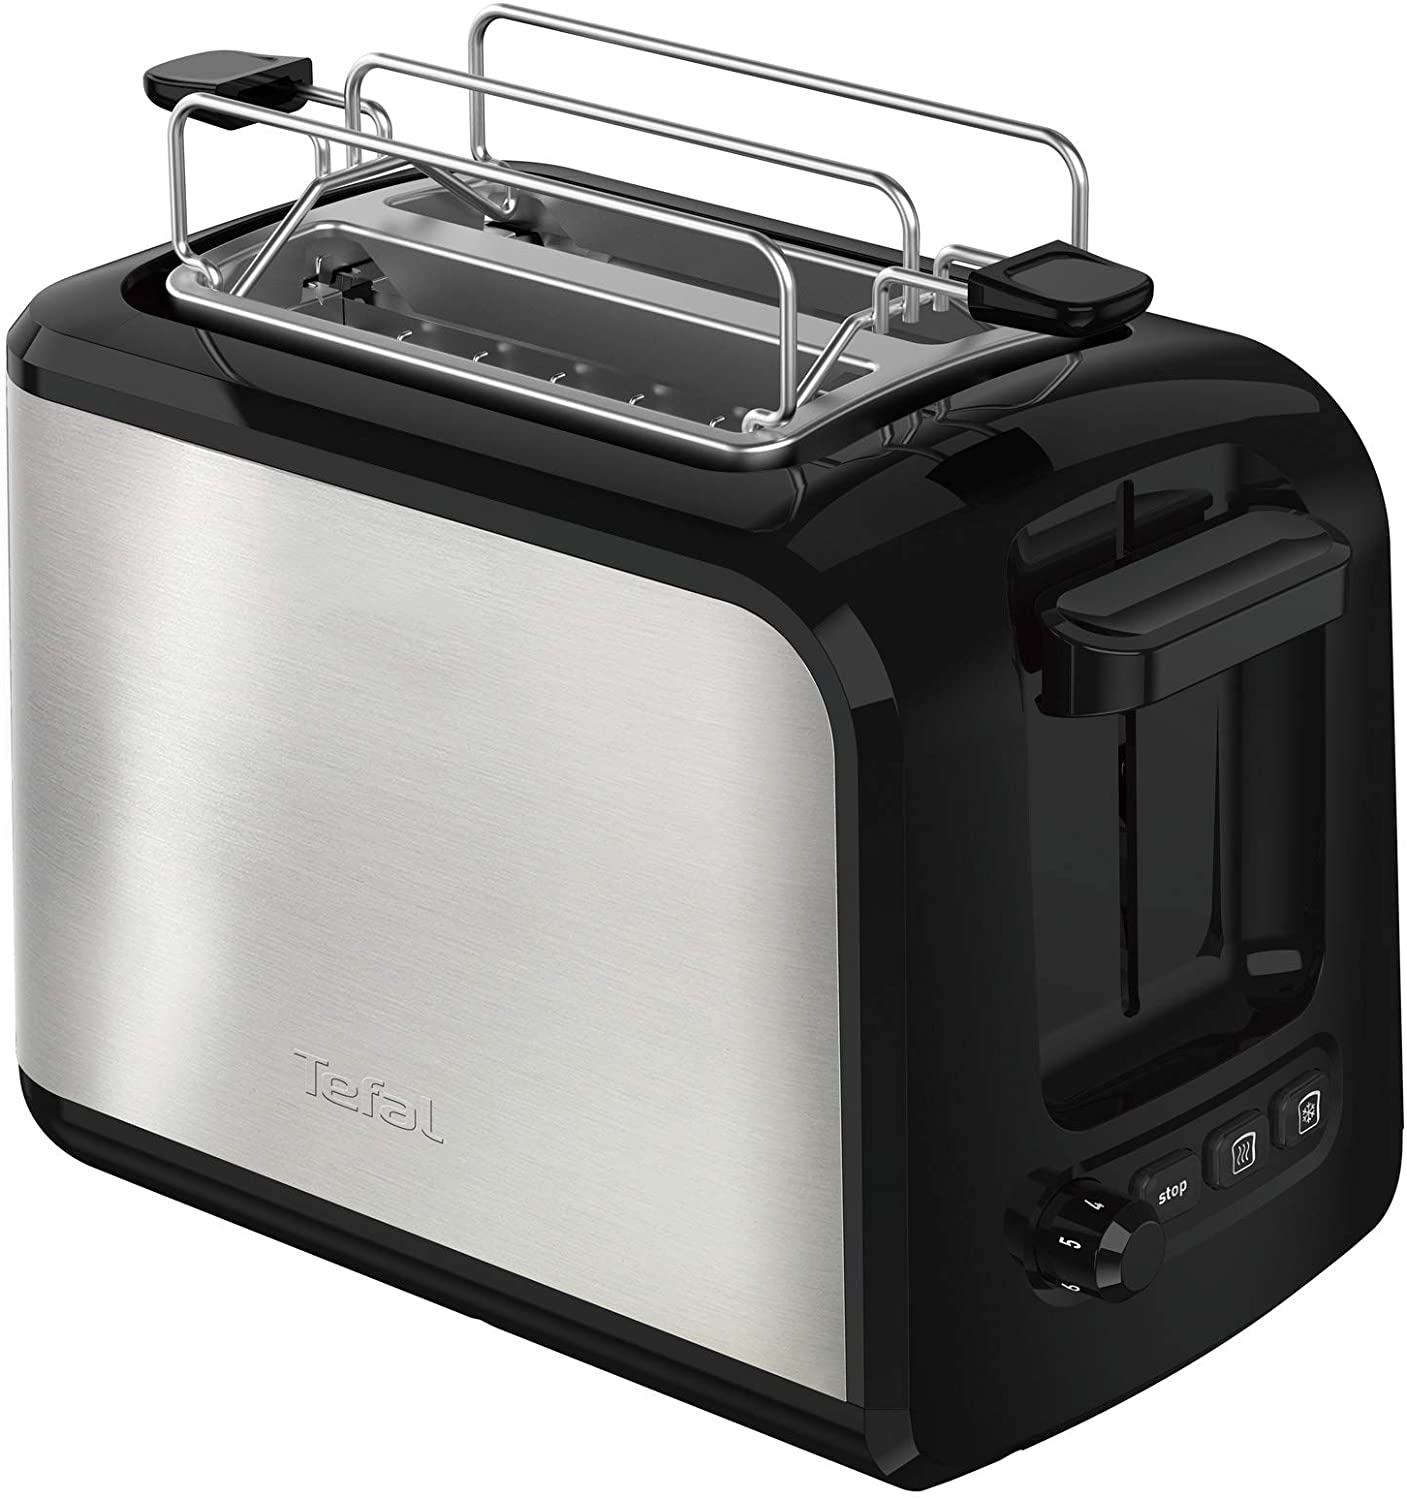 Tefal TT411D Express Toaster 850 Black Brushed Stainless Steel